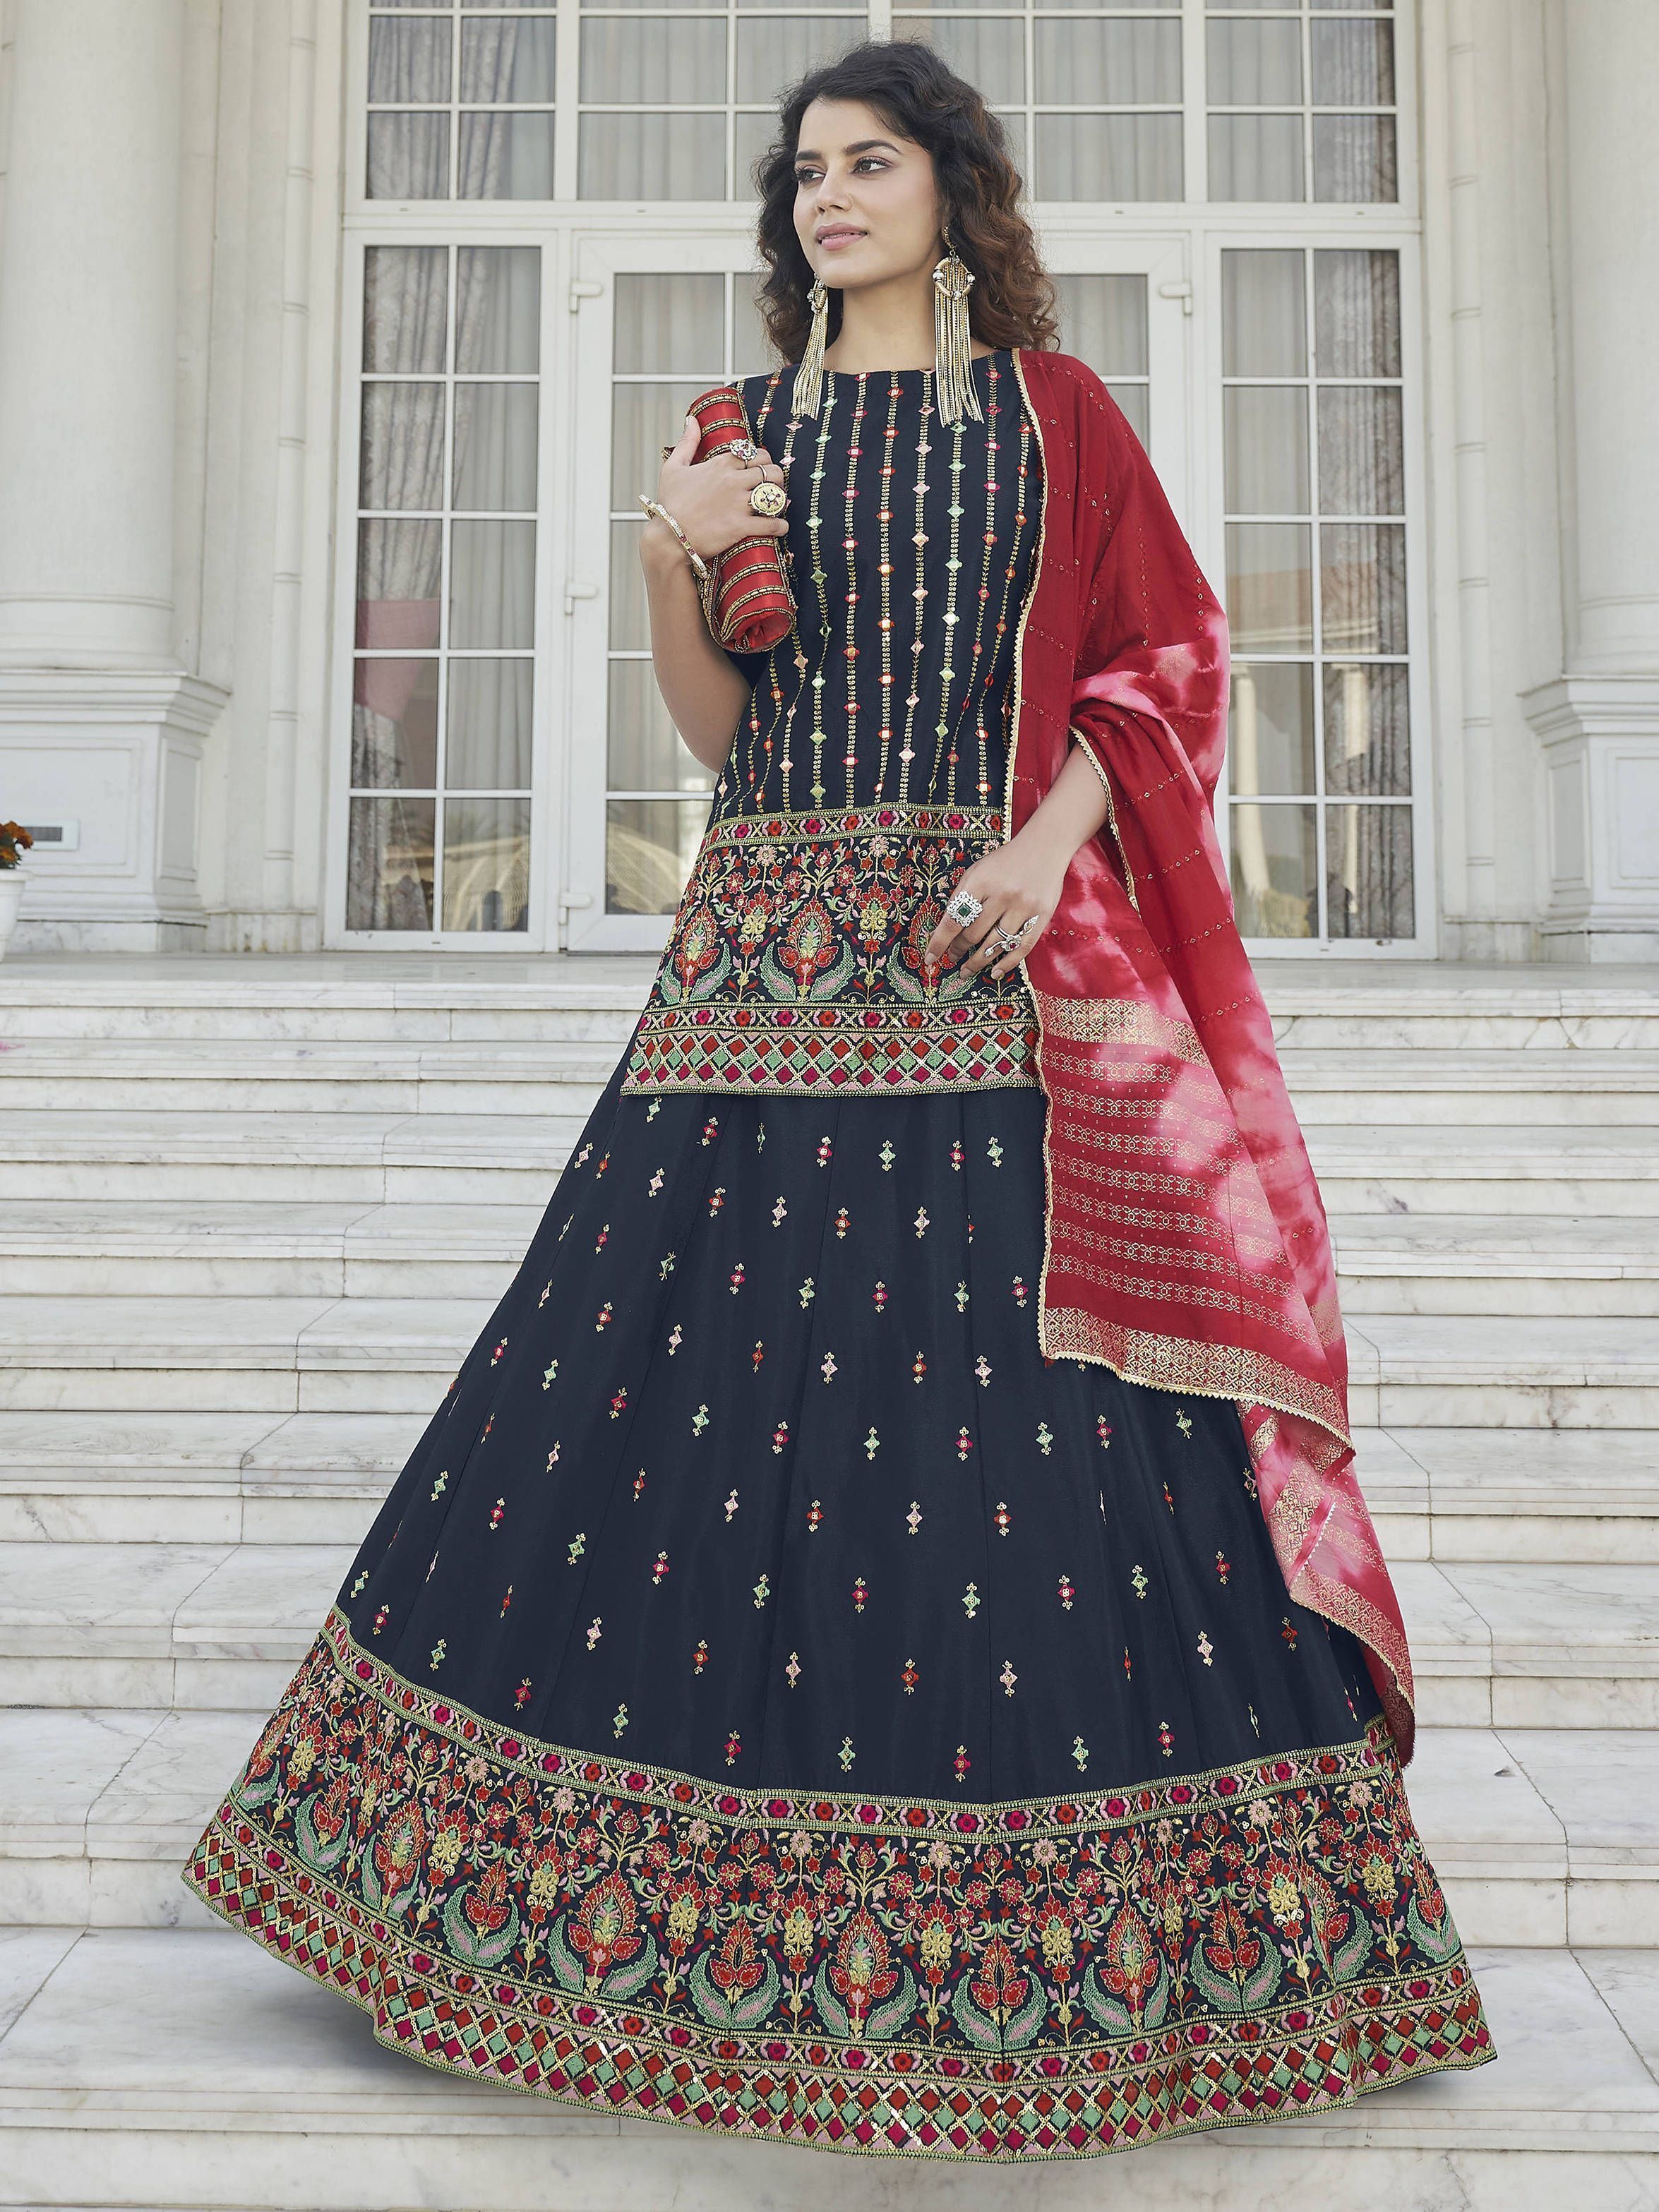 Buy rajasthani ghagra choli for women latest design in India @ Limeroad